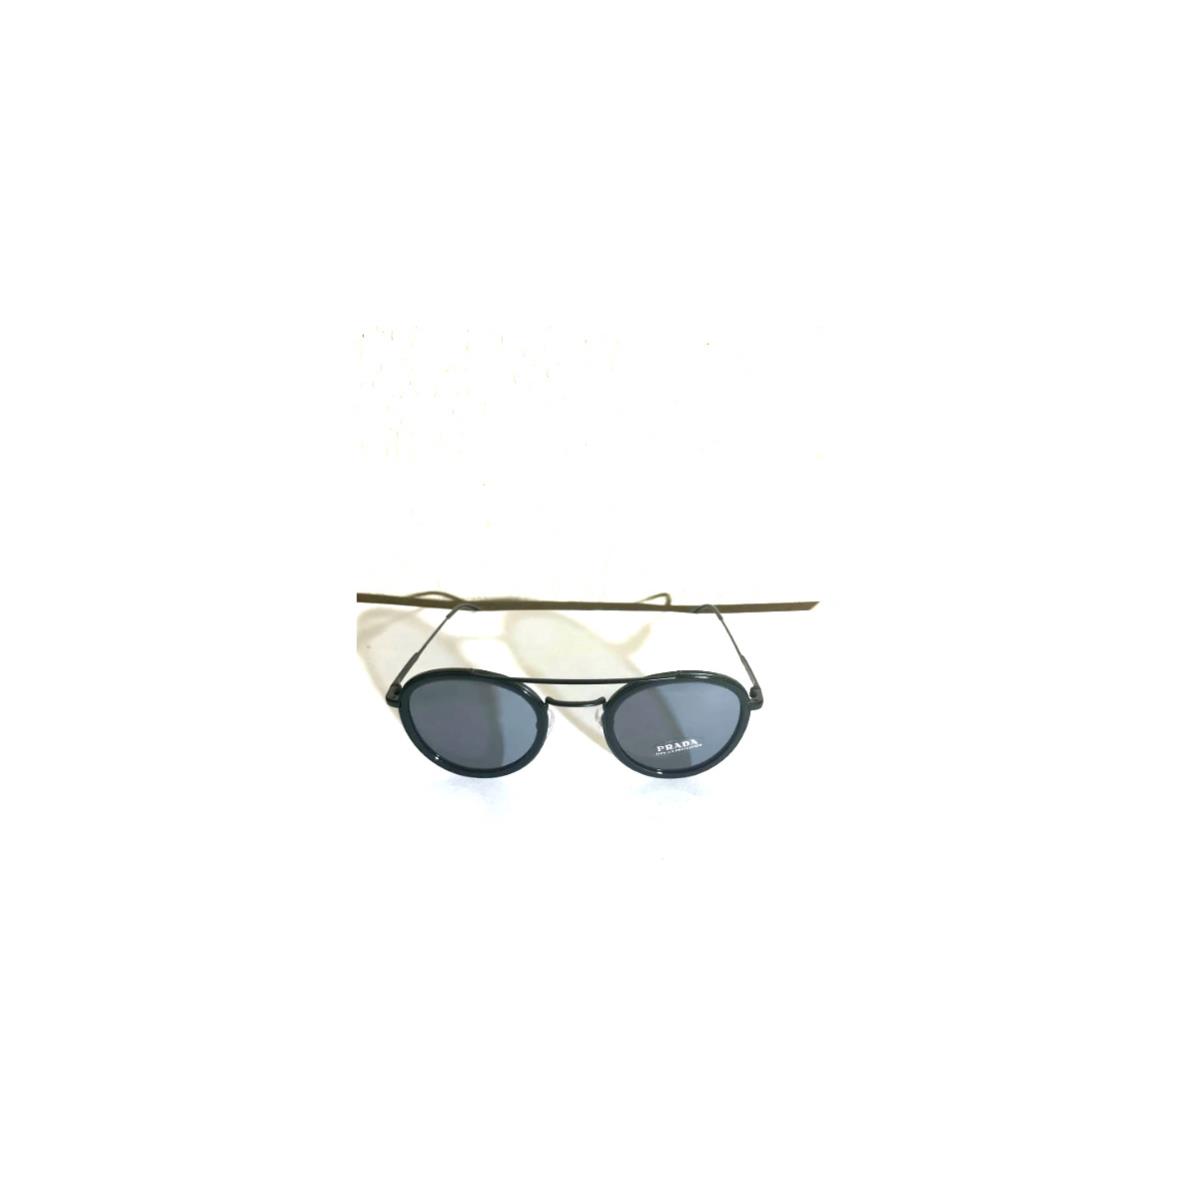 Prada Unisex Sunglasses Spr 56x Round Lenses Black Frame Made in Italy